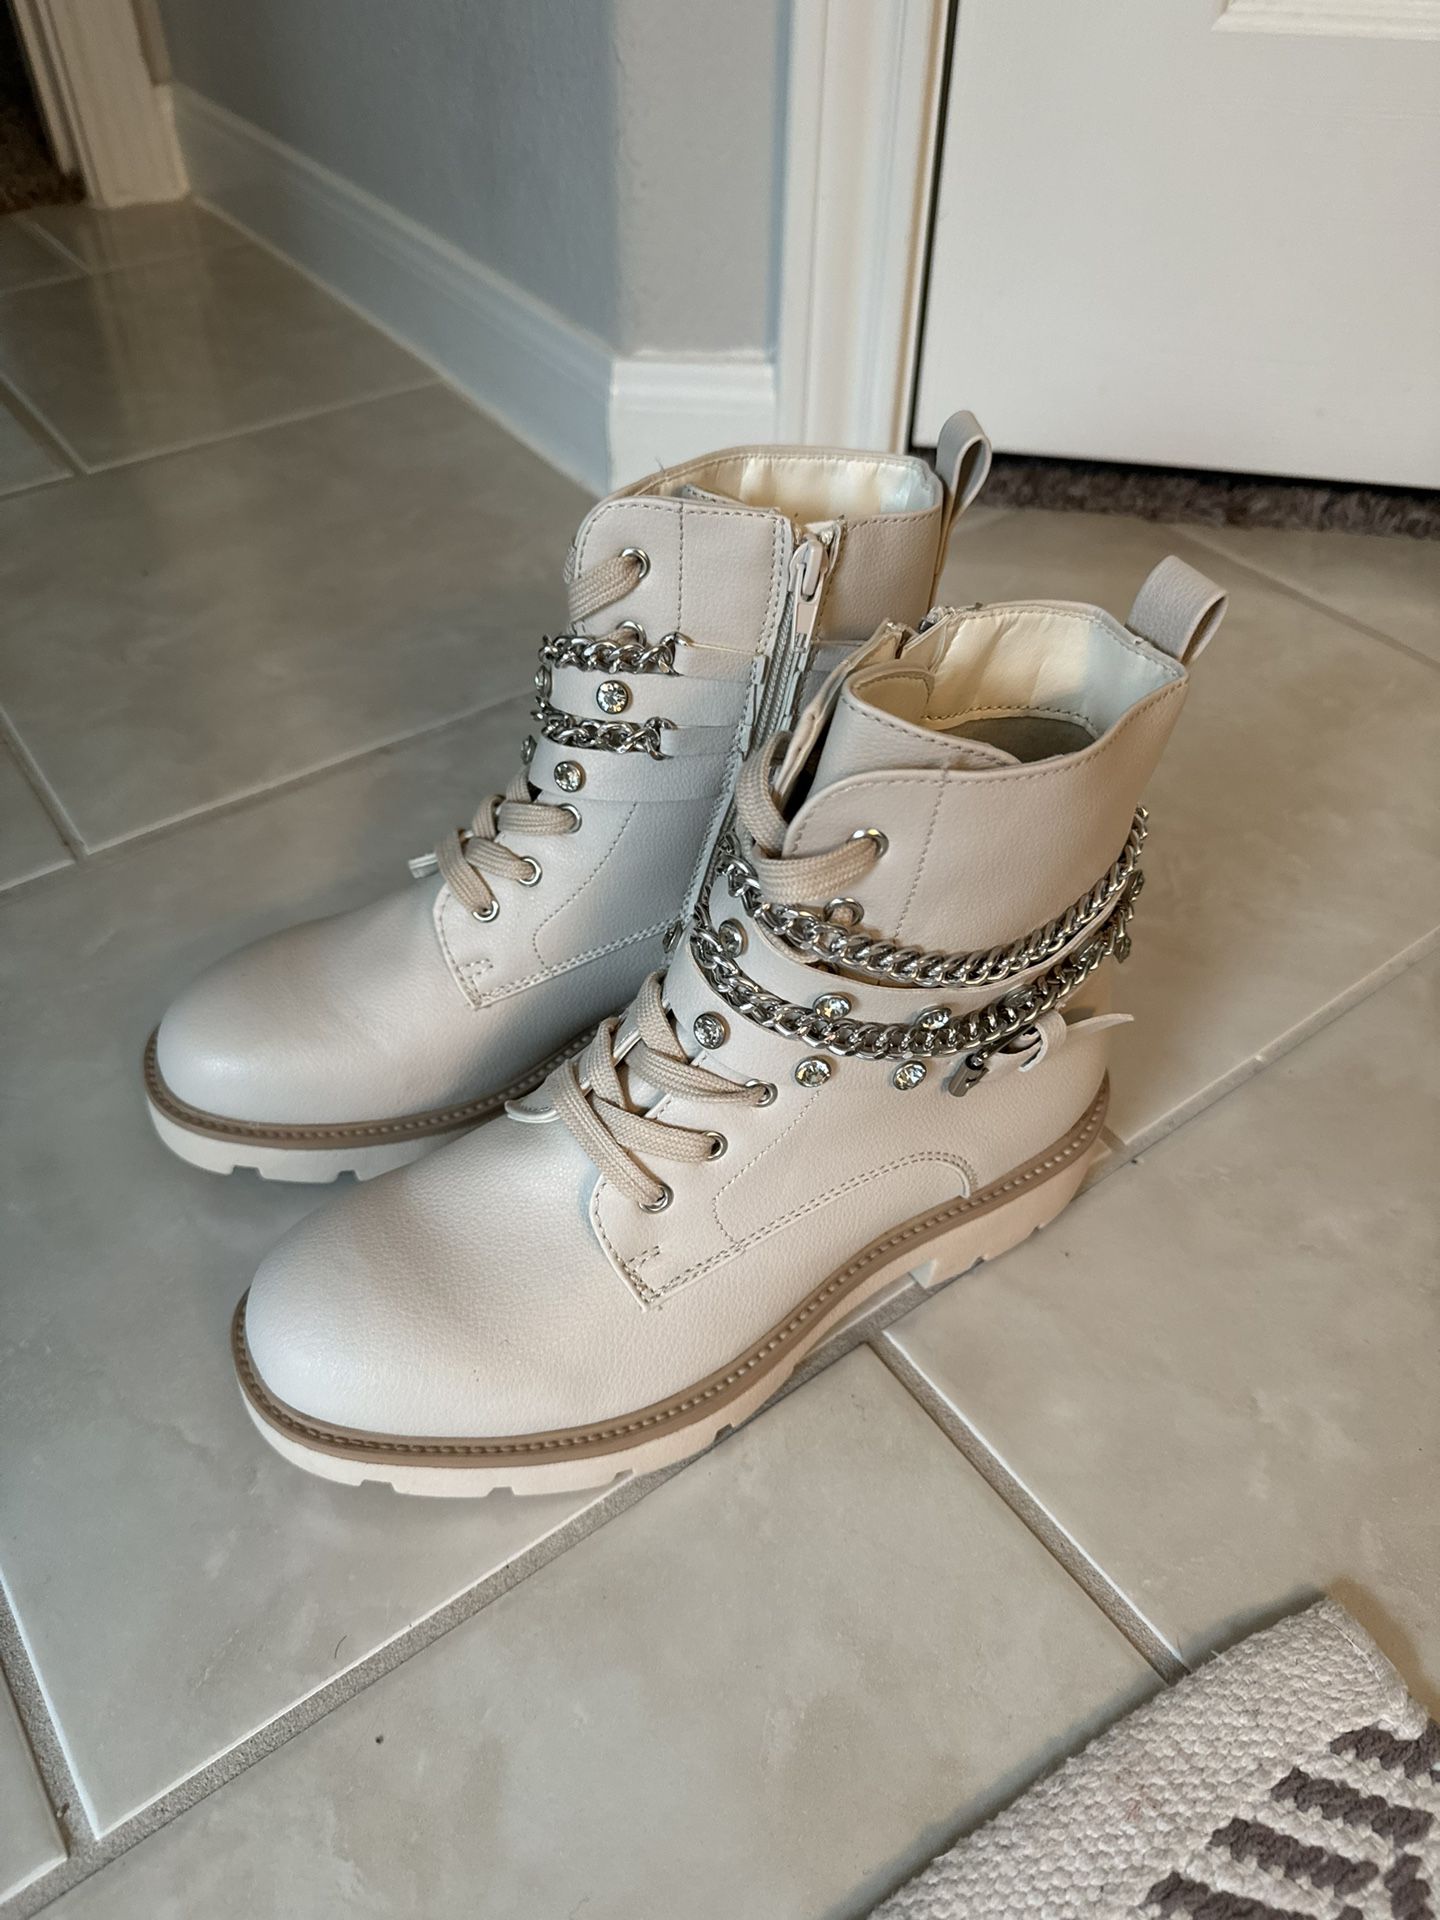 White Boots-Women 7 